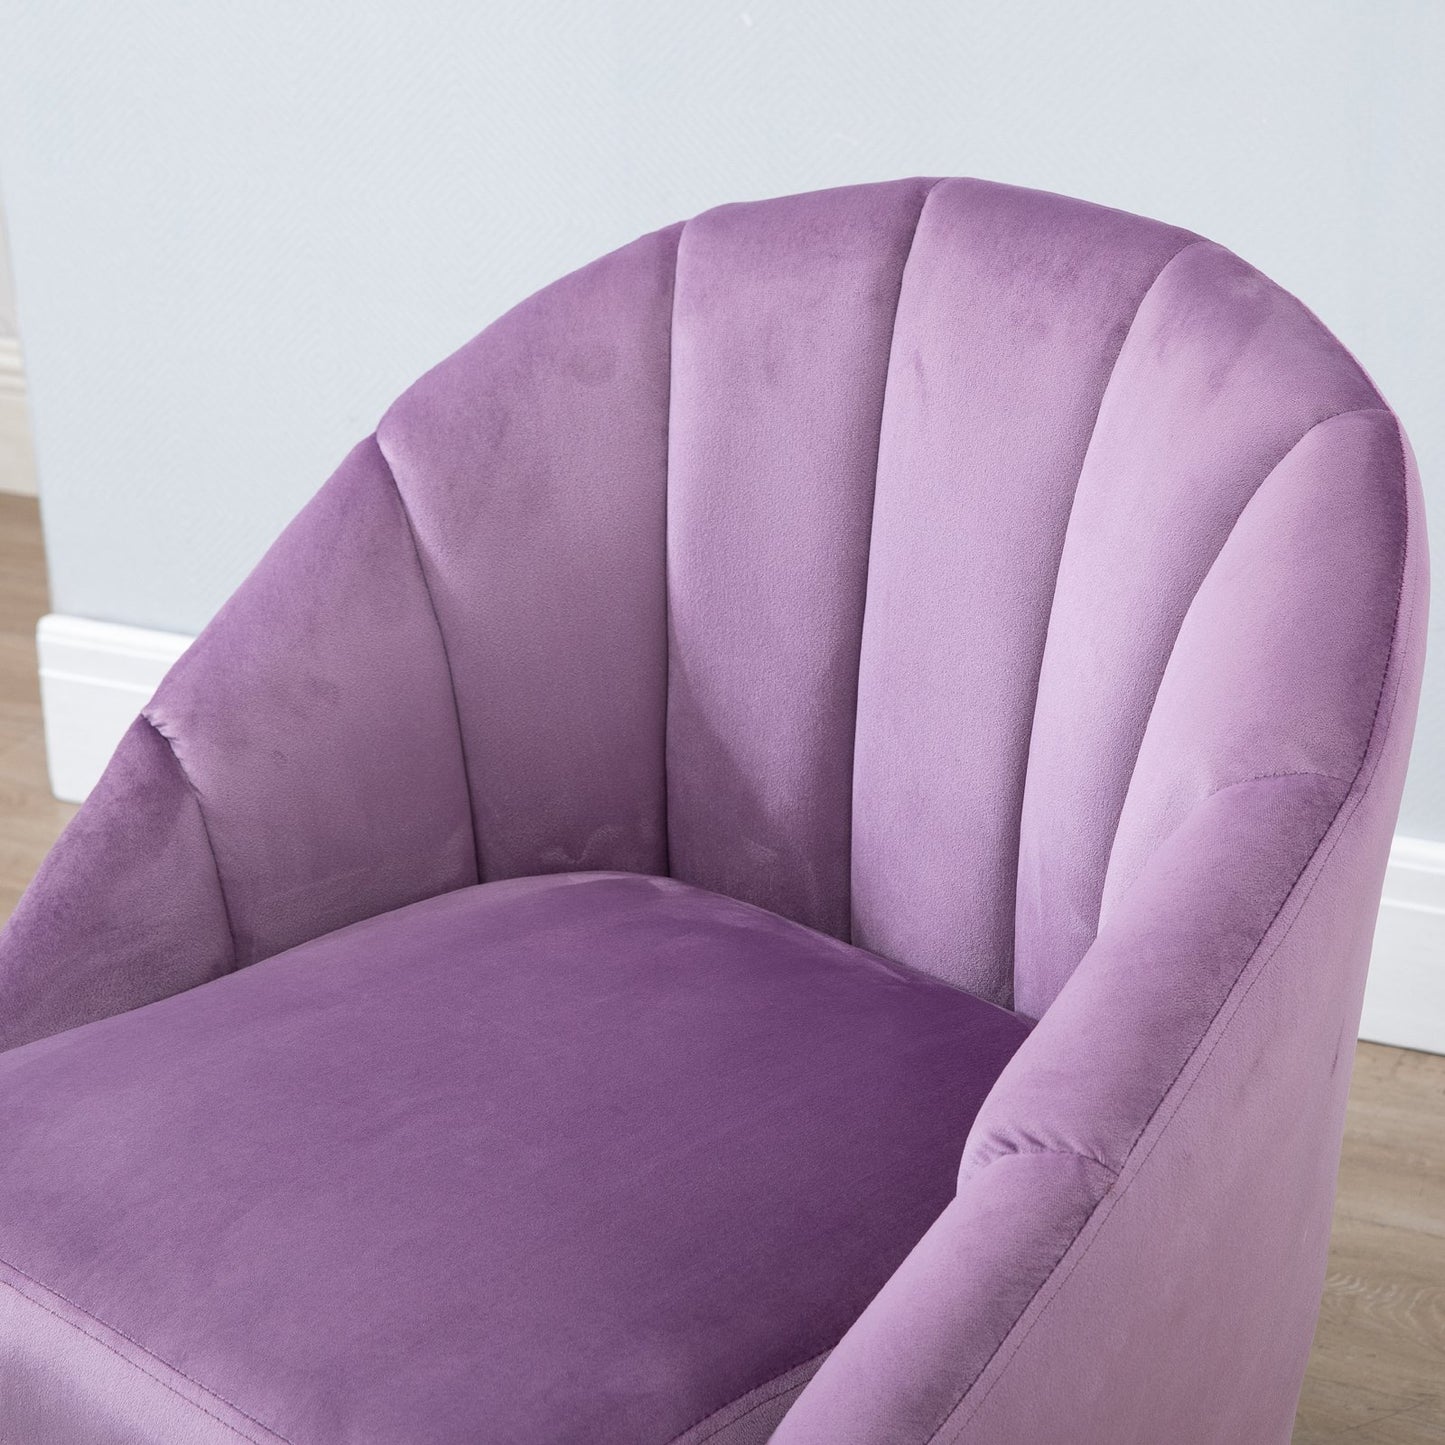 HOMCOM Decadent Single Lounge Chair in Velvet-Look Upholstery w/ Wooden Legs Purple